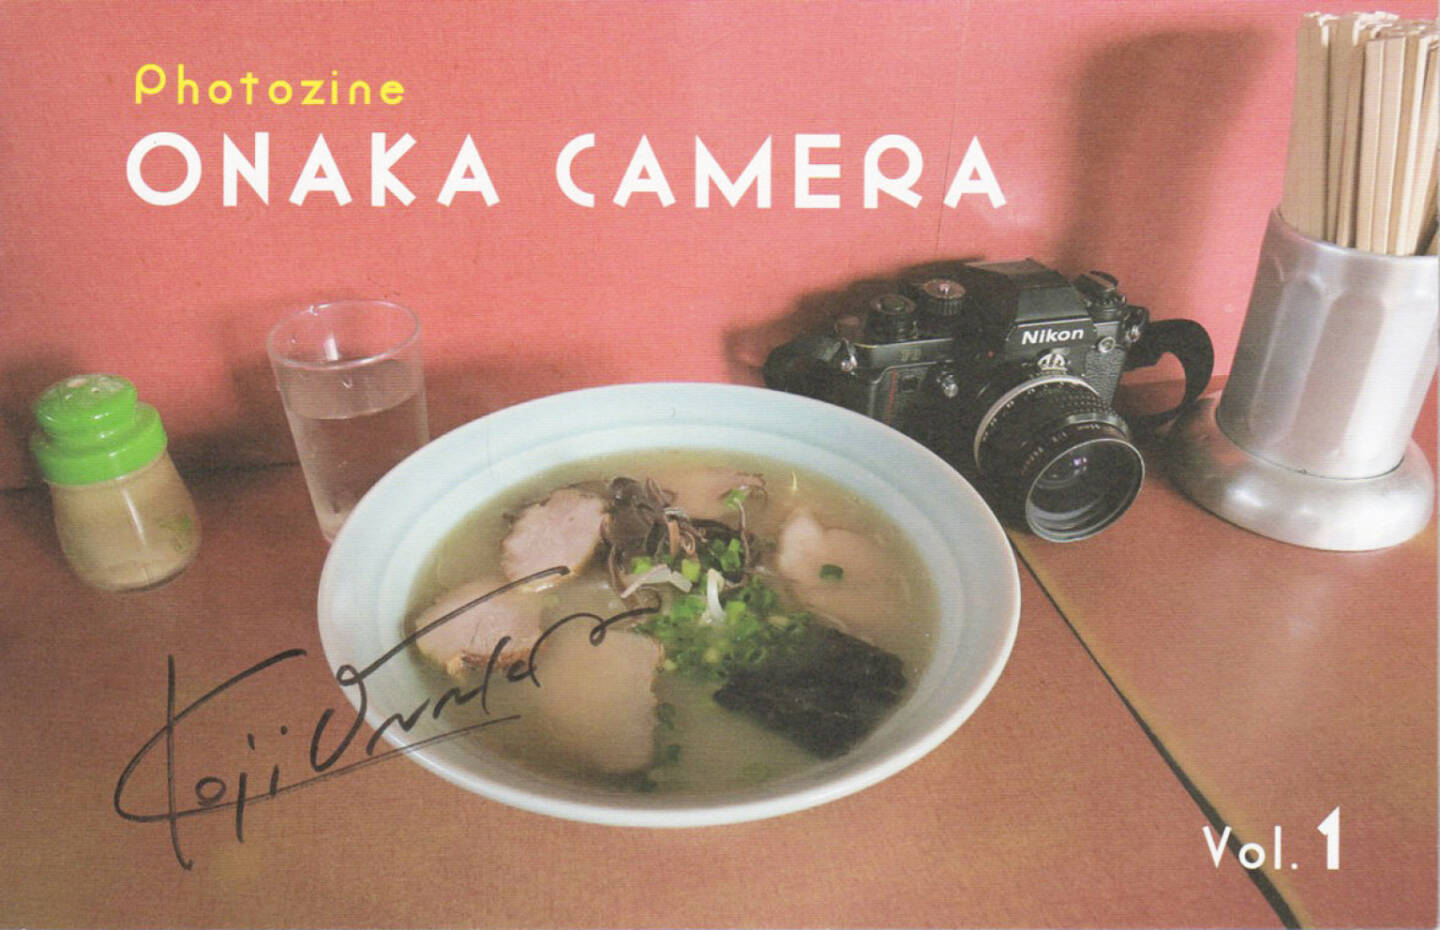 Koji Onaka - Onaka Camera Vol.1, Matatabi Library 2014, Cover - http://josefchladek.com/book/koji_onaka_-_onaka_camera_vol1